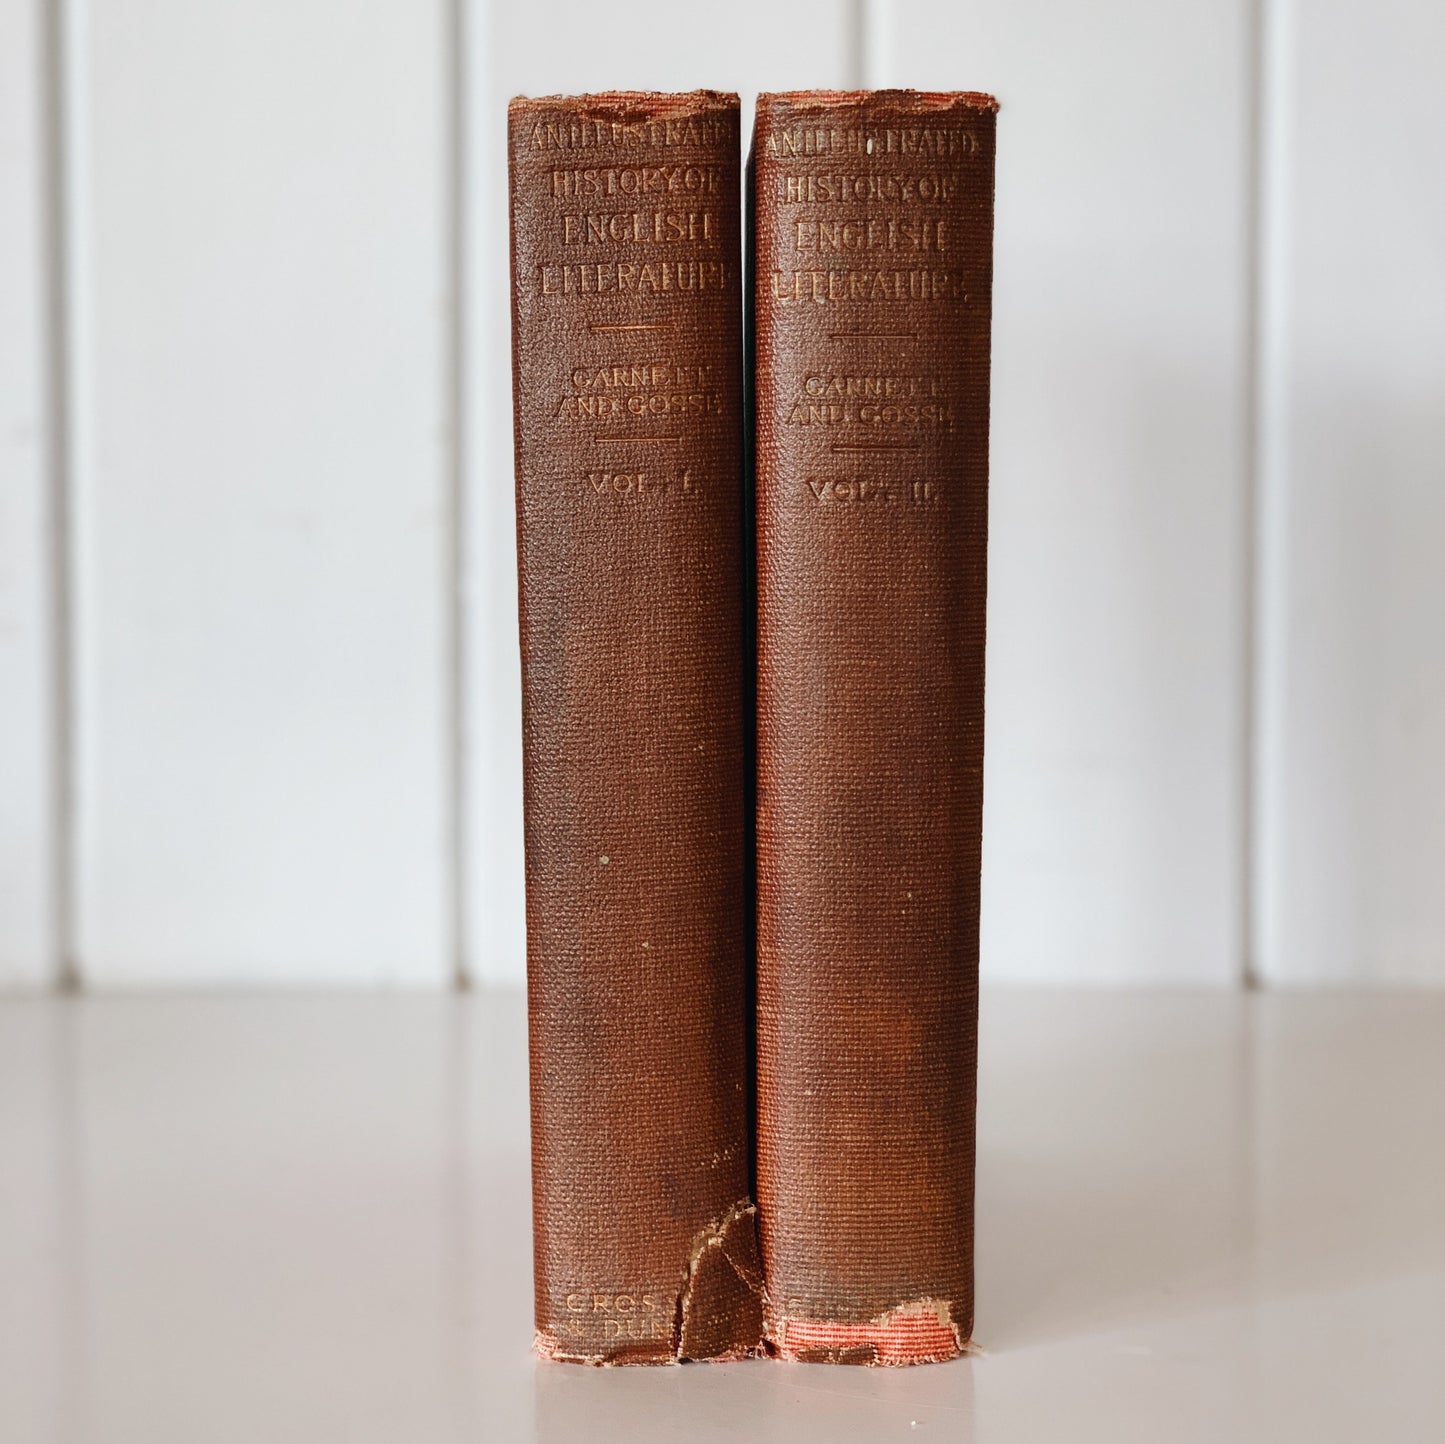 English Literature An Illustrated Record, Richard Garnett, 1904 Hardcover Volumes 1-2